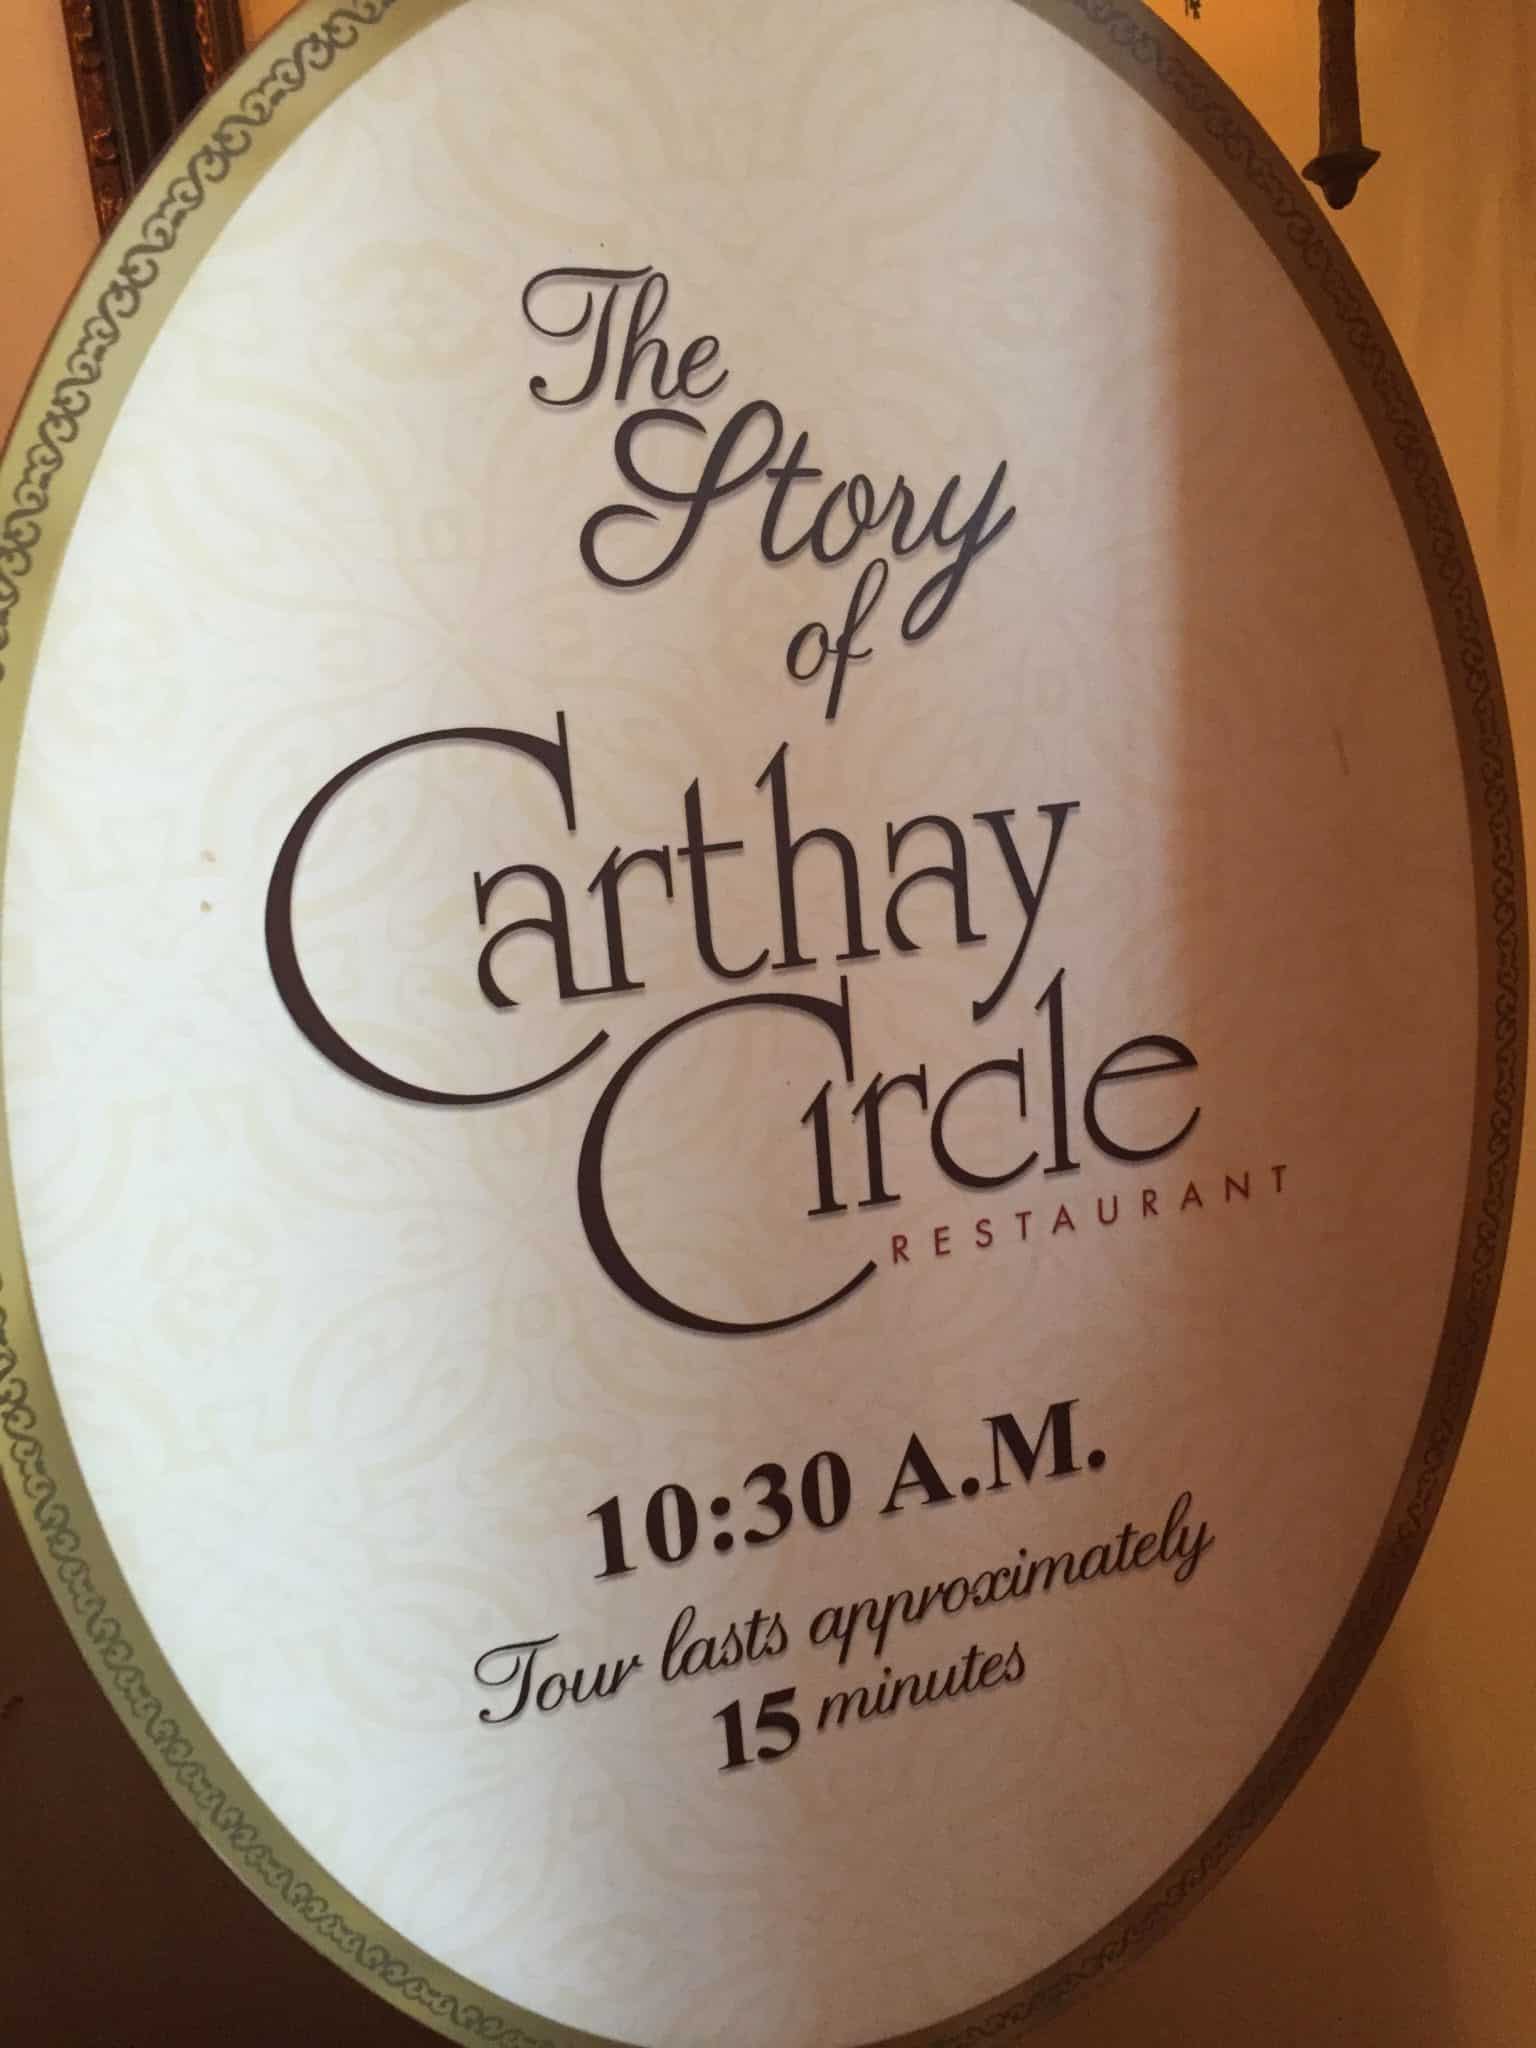 Carthay Circle tour